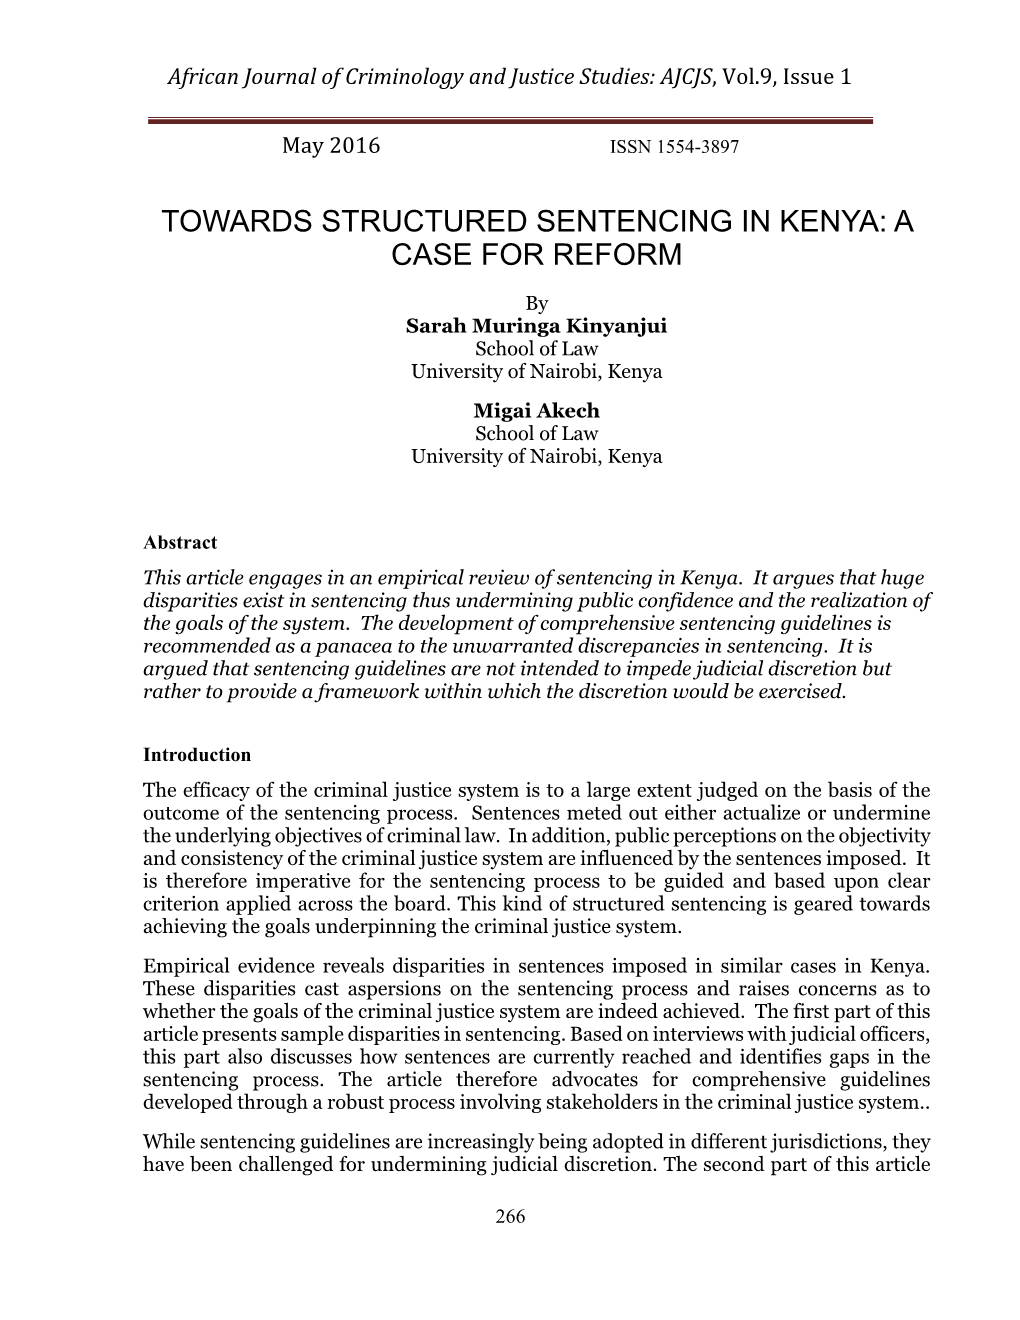 Towards Structured Sentencing in Kenya: a Case for Reform